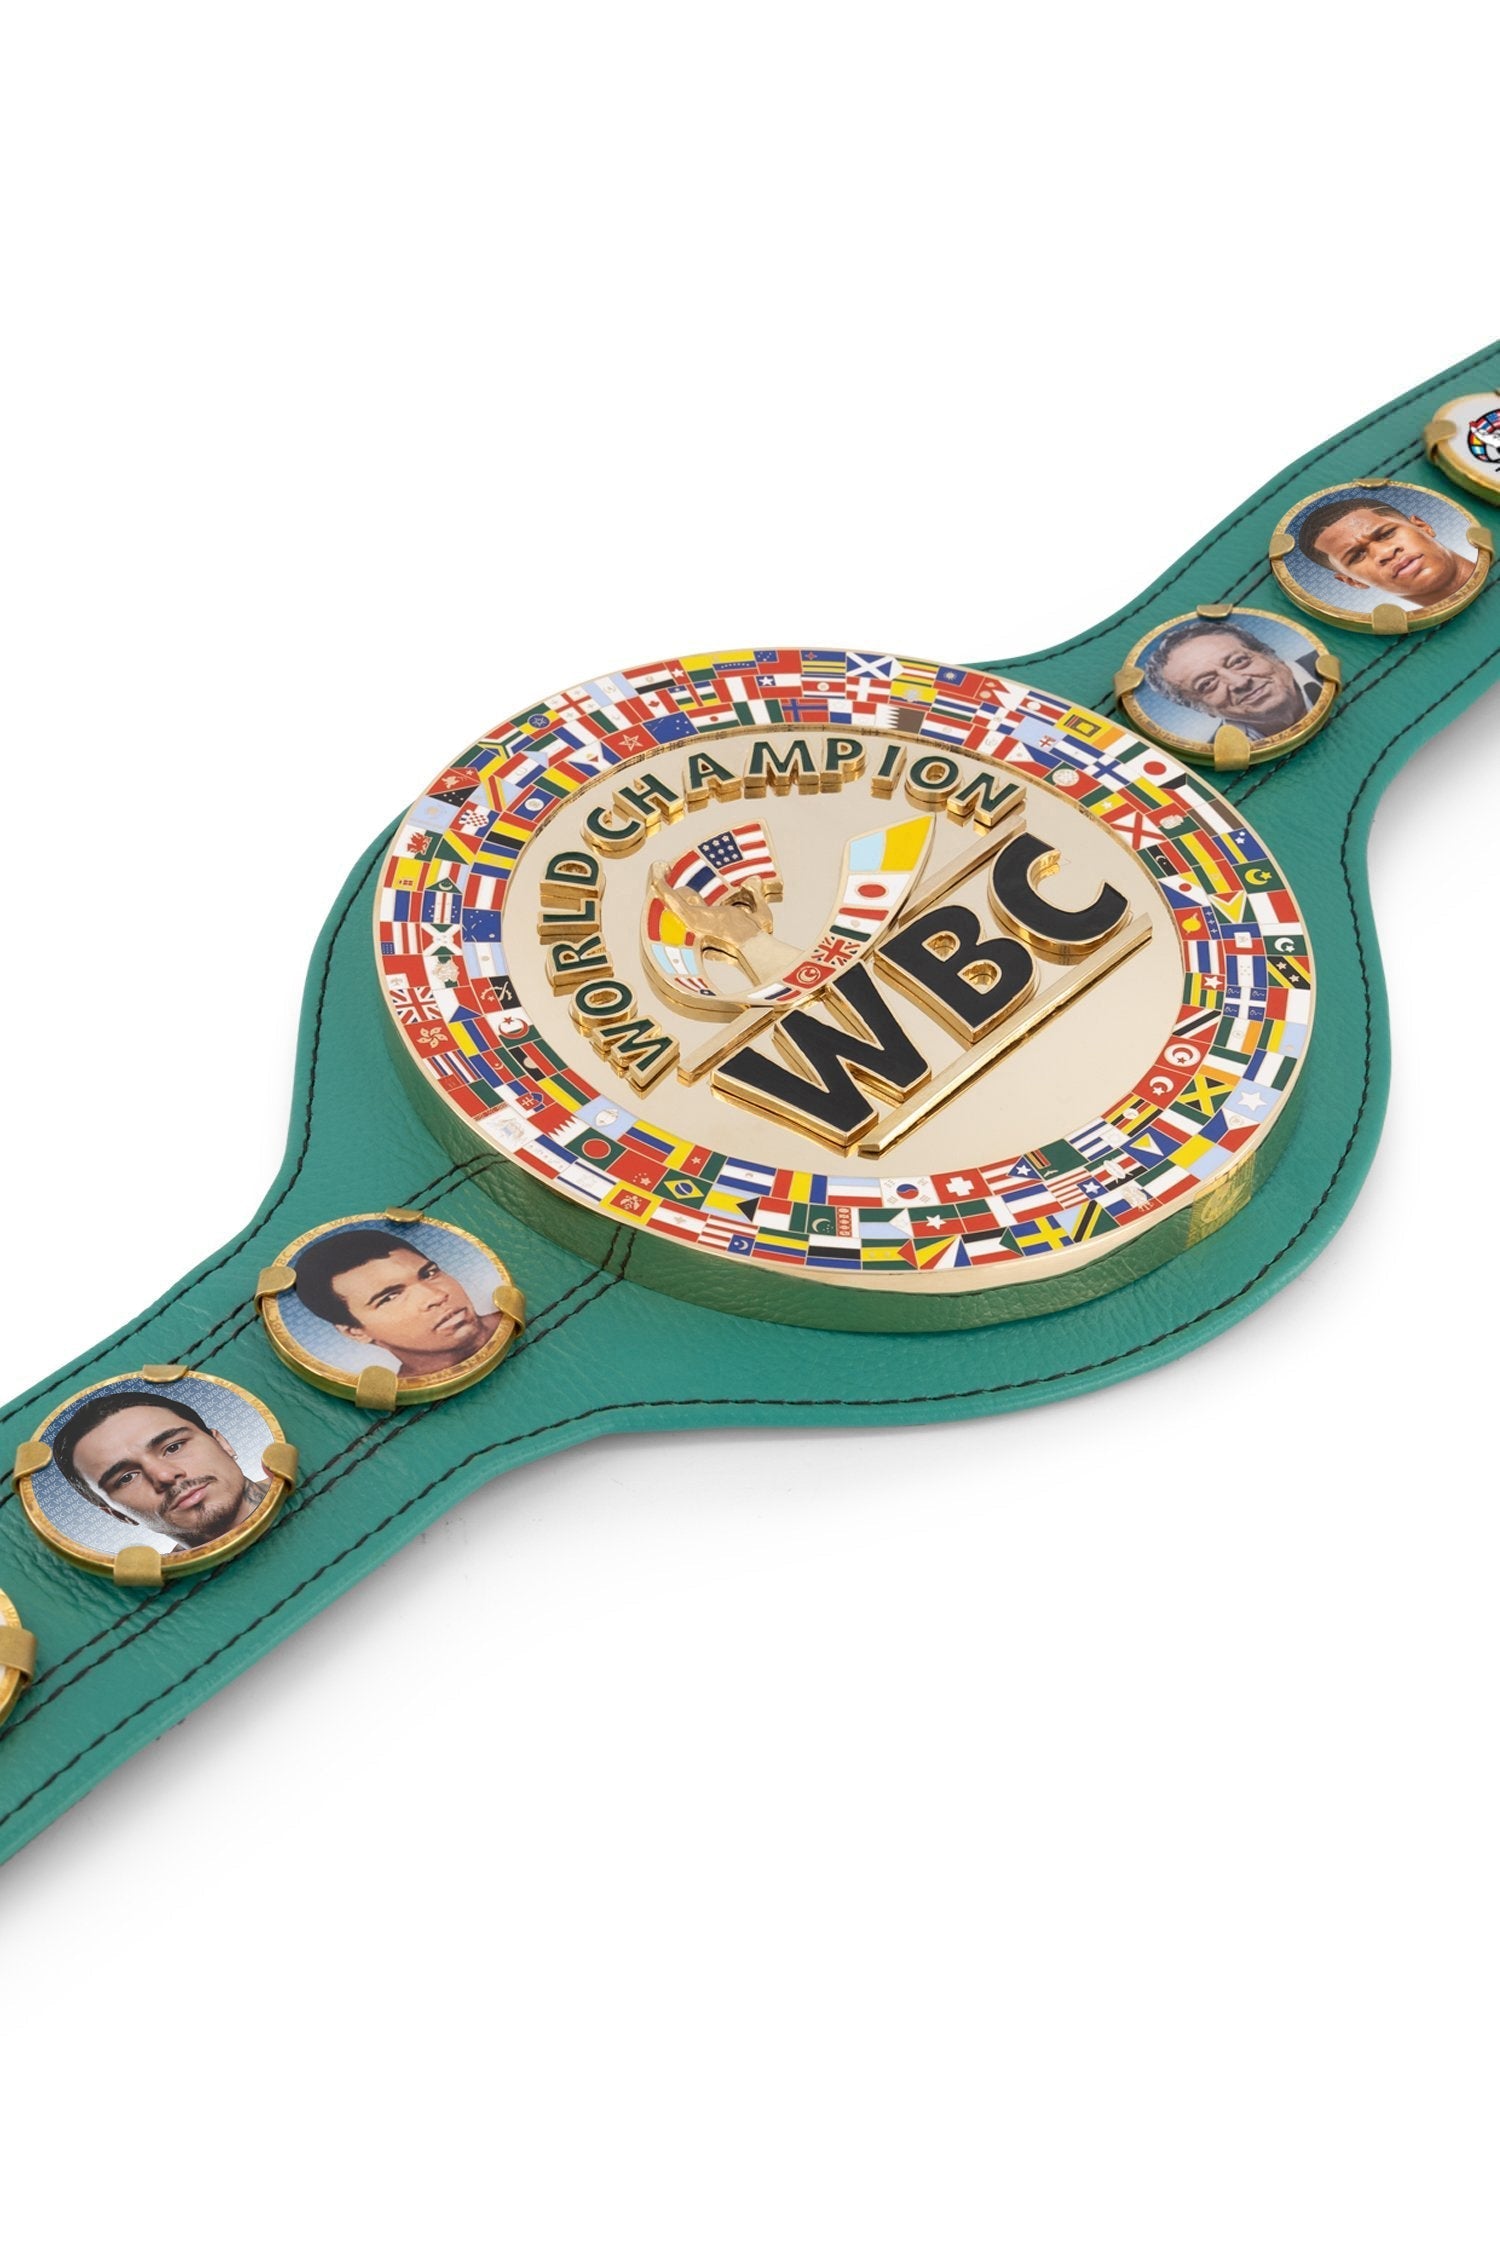 WBC Store WBC Championship Replica Belt George Kambosos Jr. vs. Devin Haney